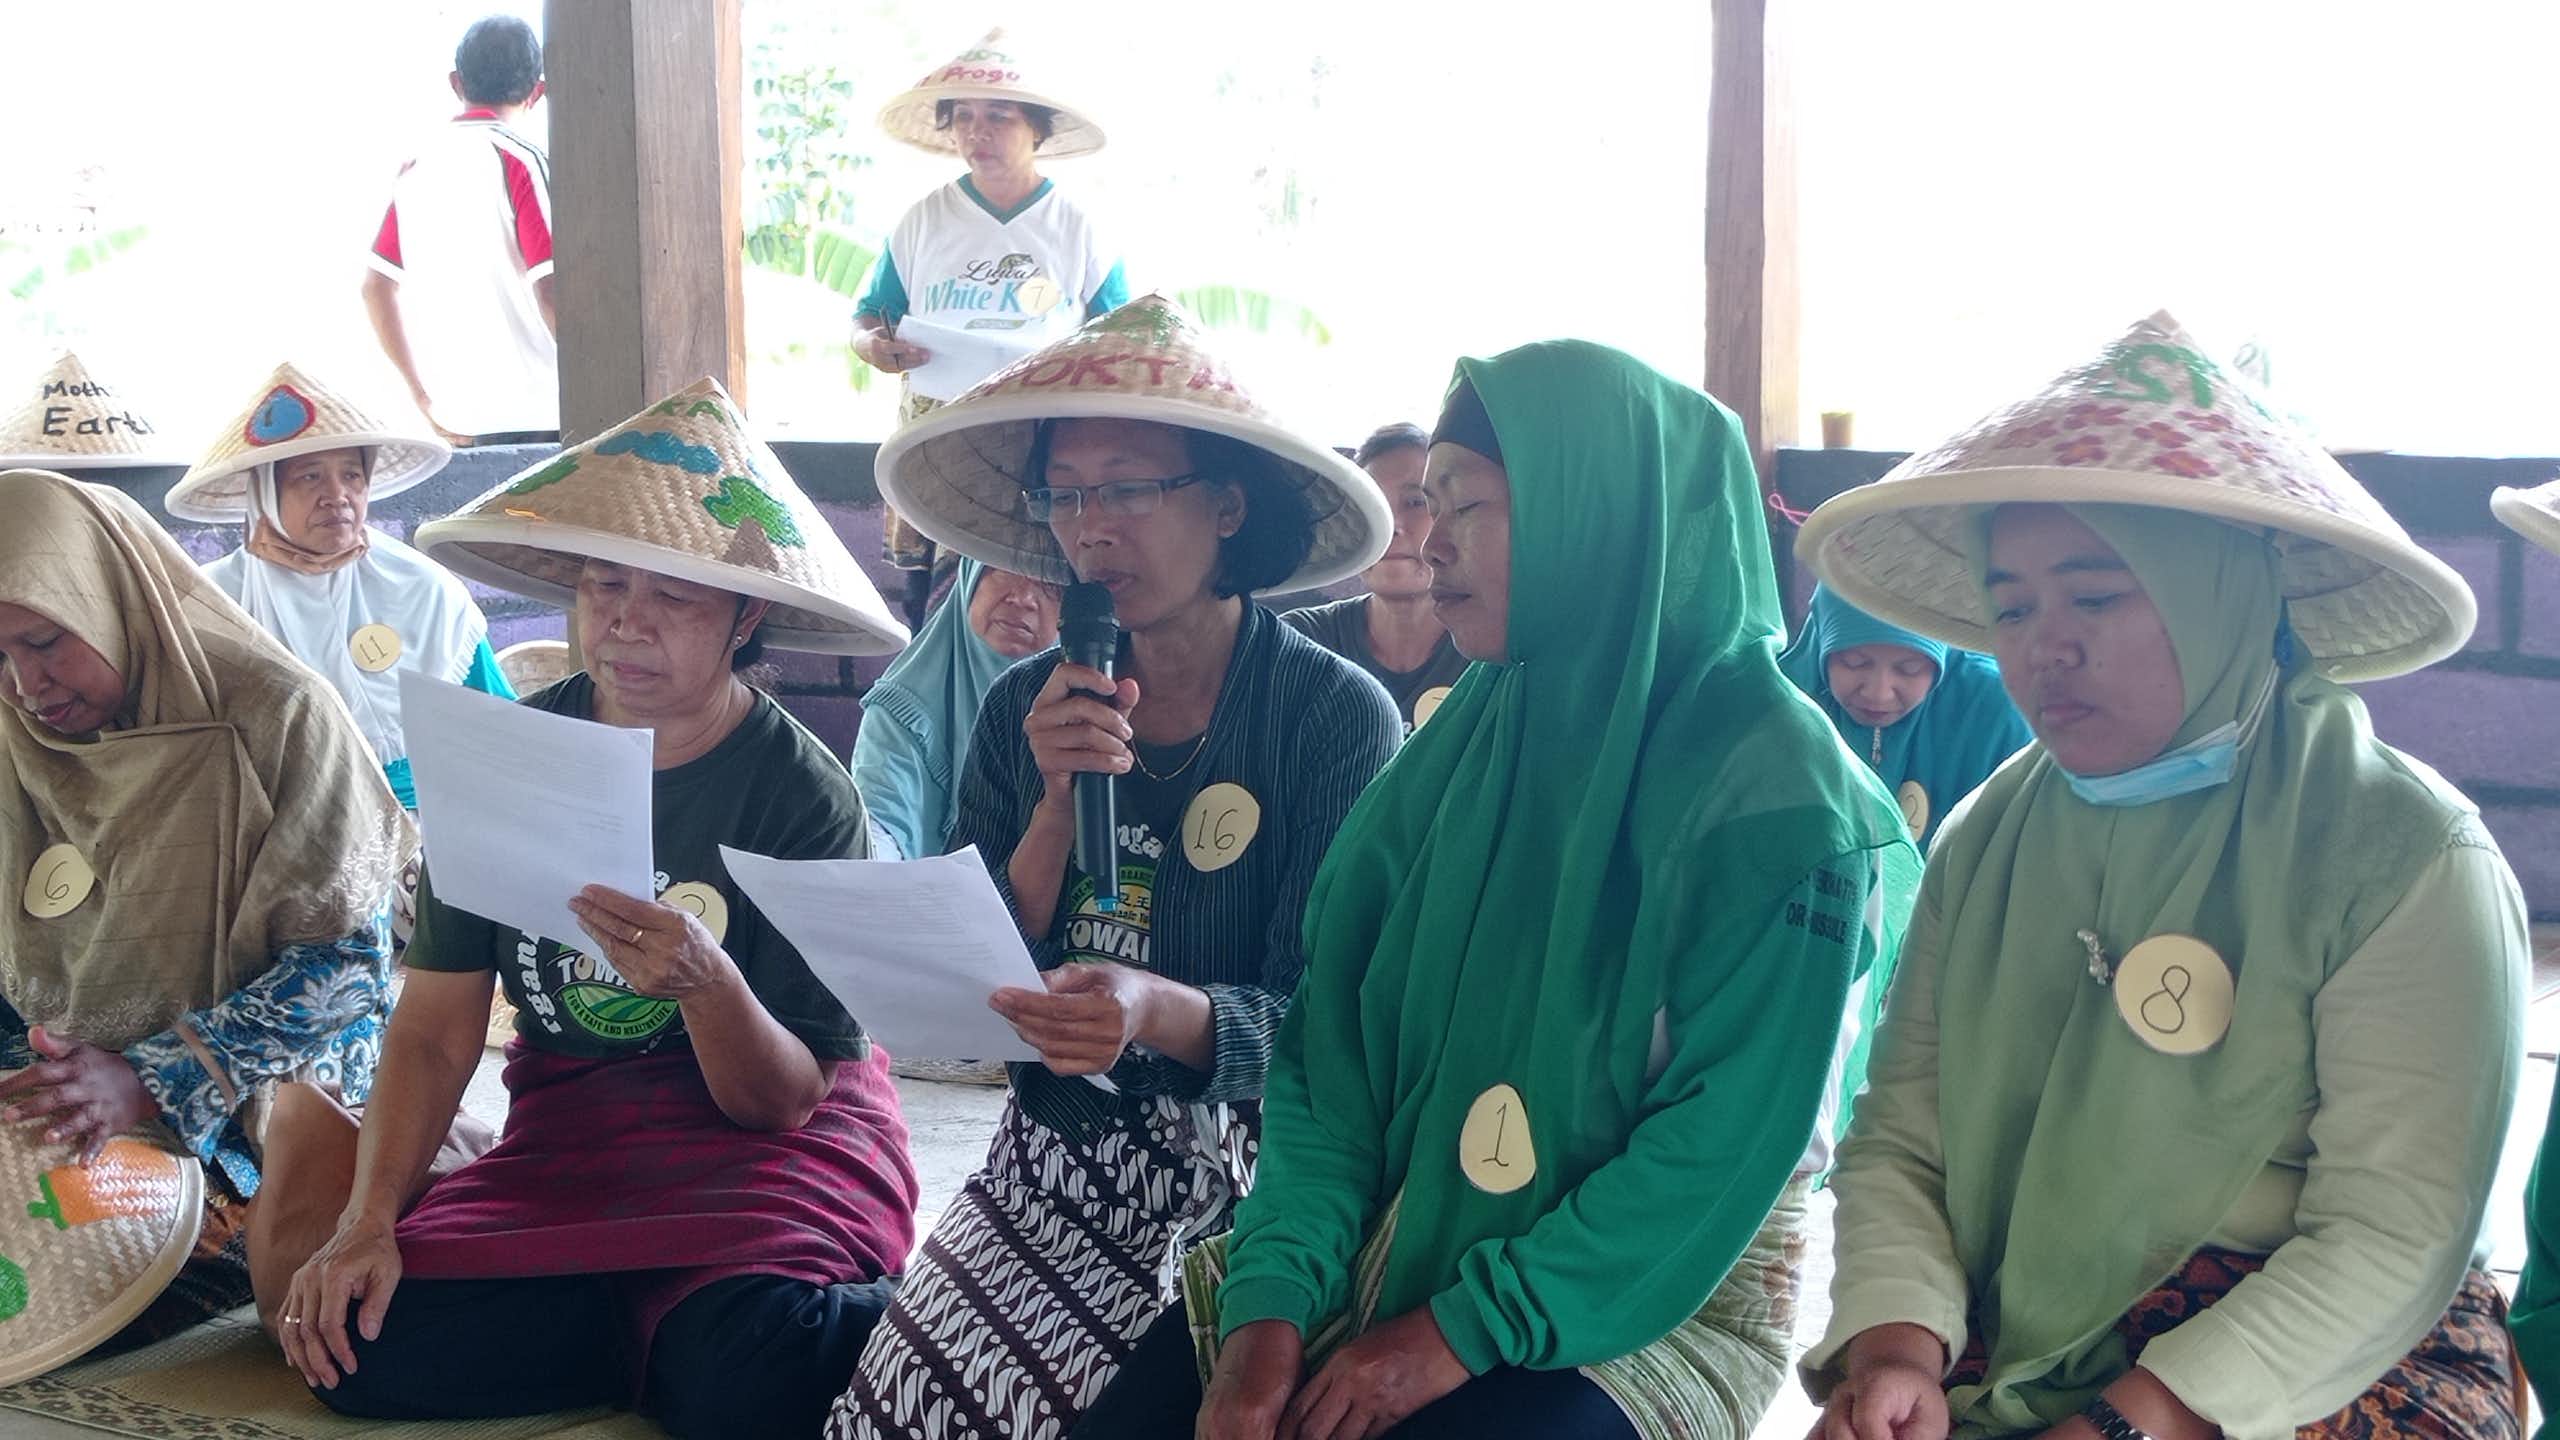 Lestari dalam tradisi: menyelami aksi perempuan Kulon Progo merawat alam dan pangan dengan bertani